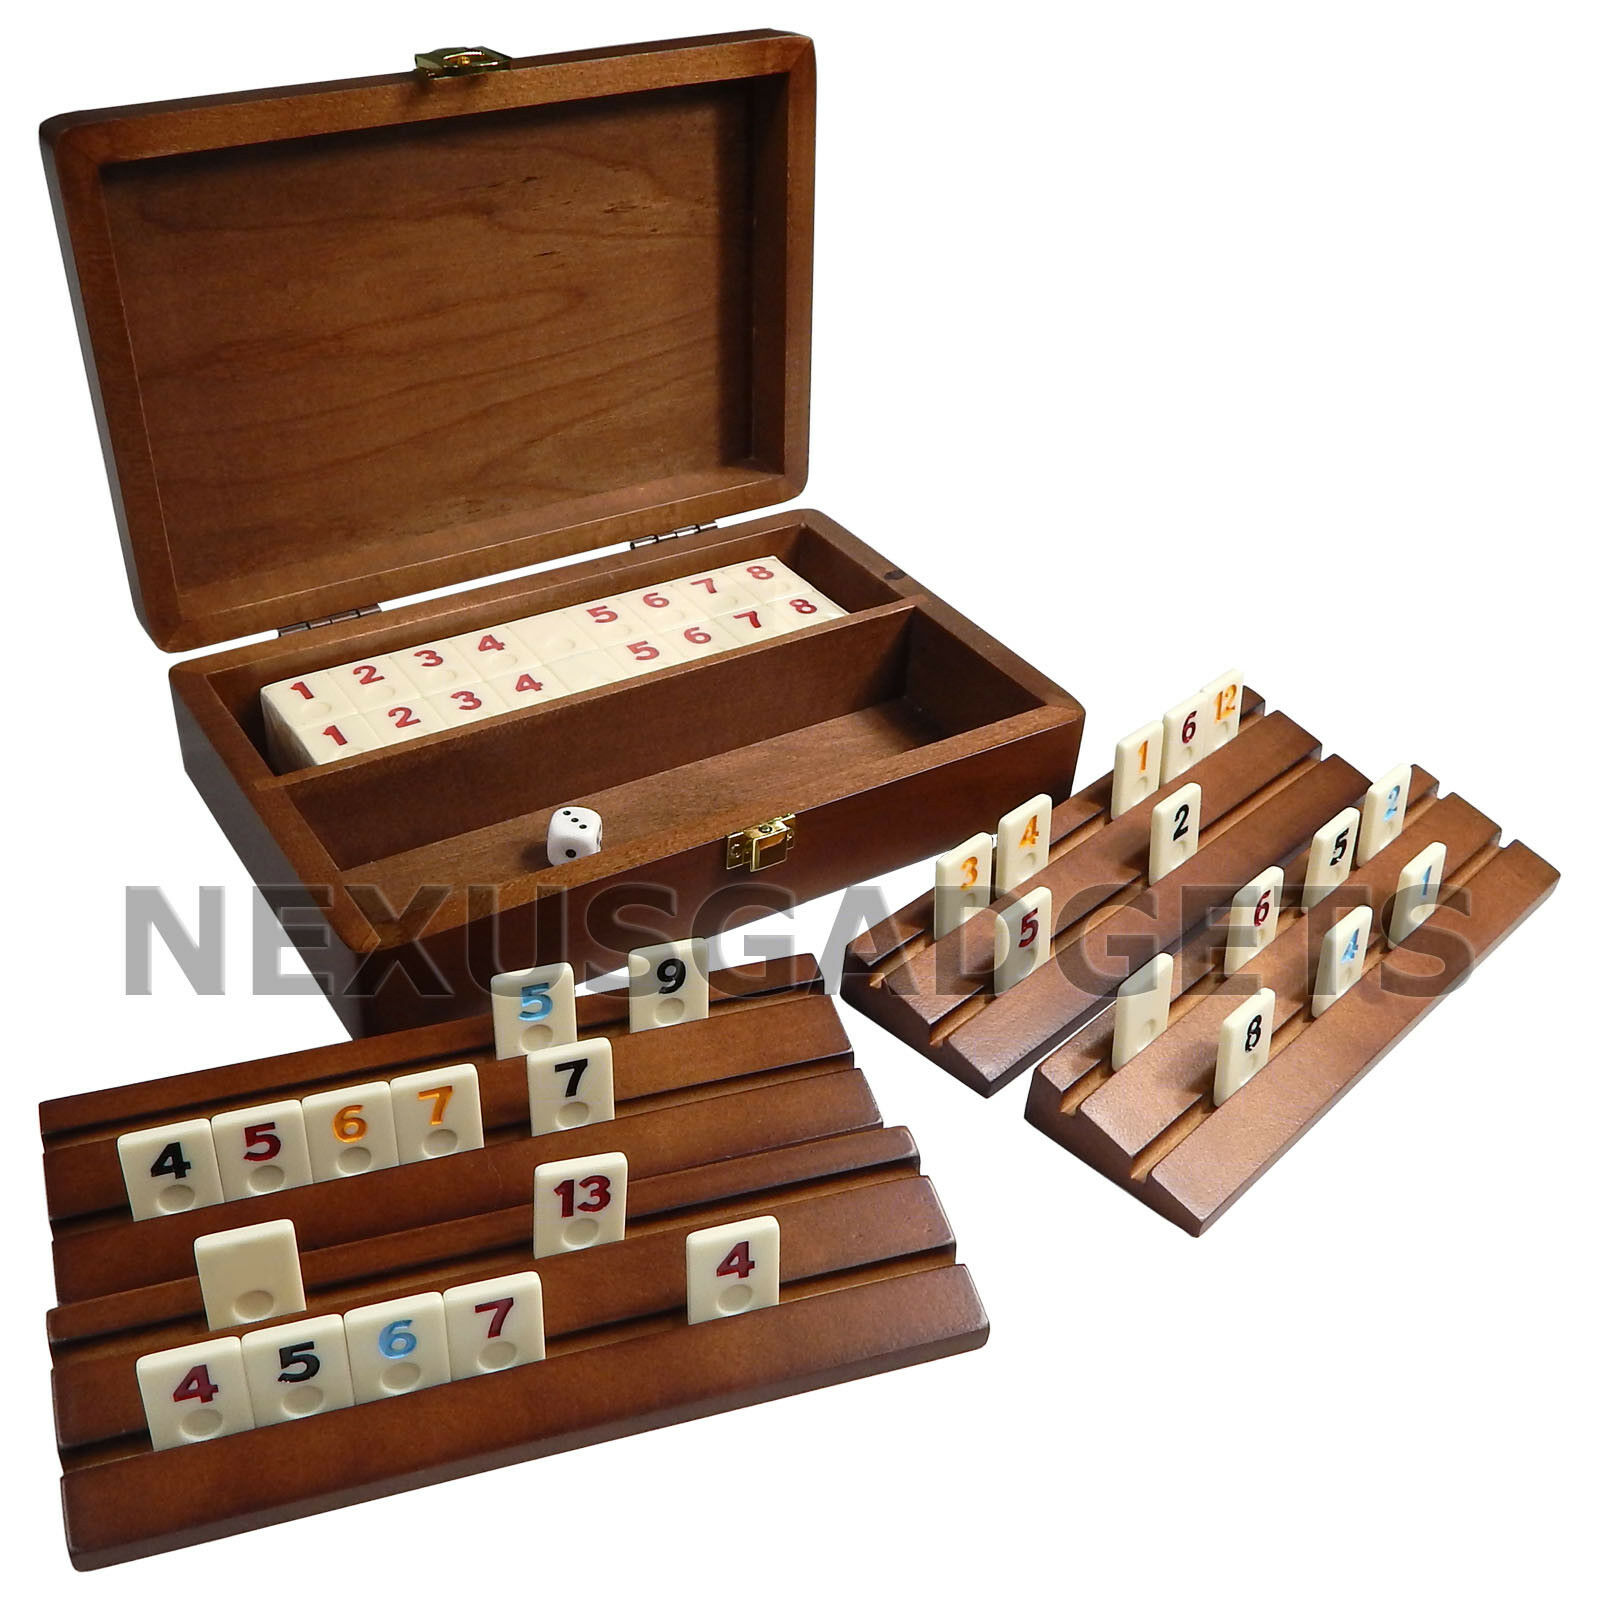 Triz Travel Rummy Board Game Set Wood Case Mini Small Racks Tiles Classic, New